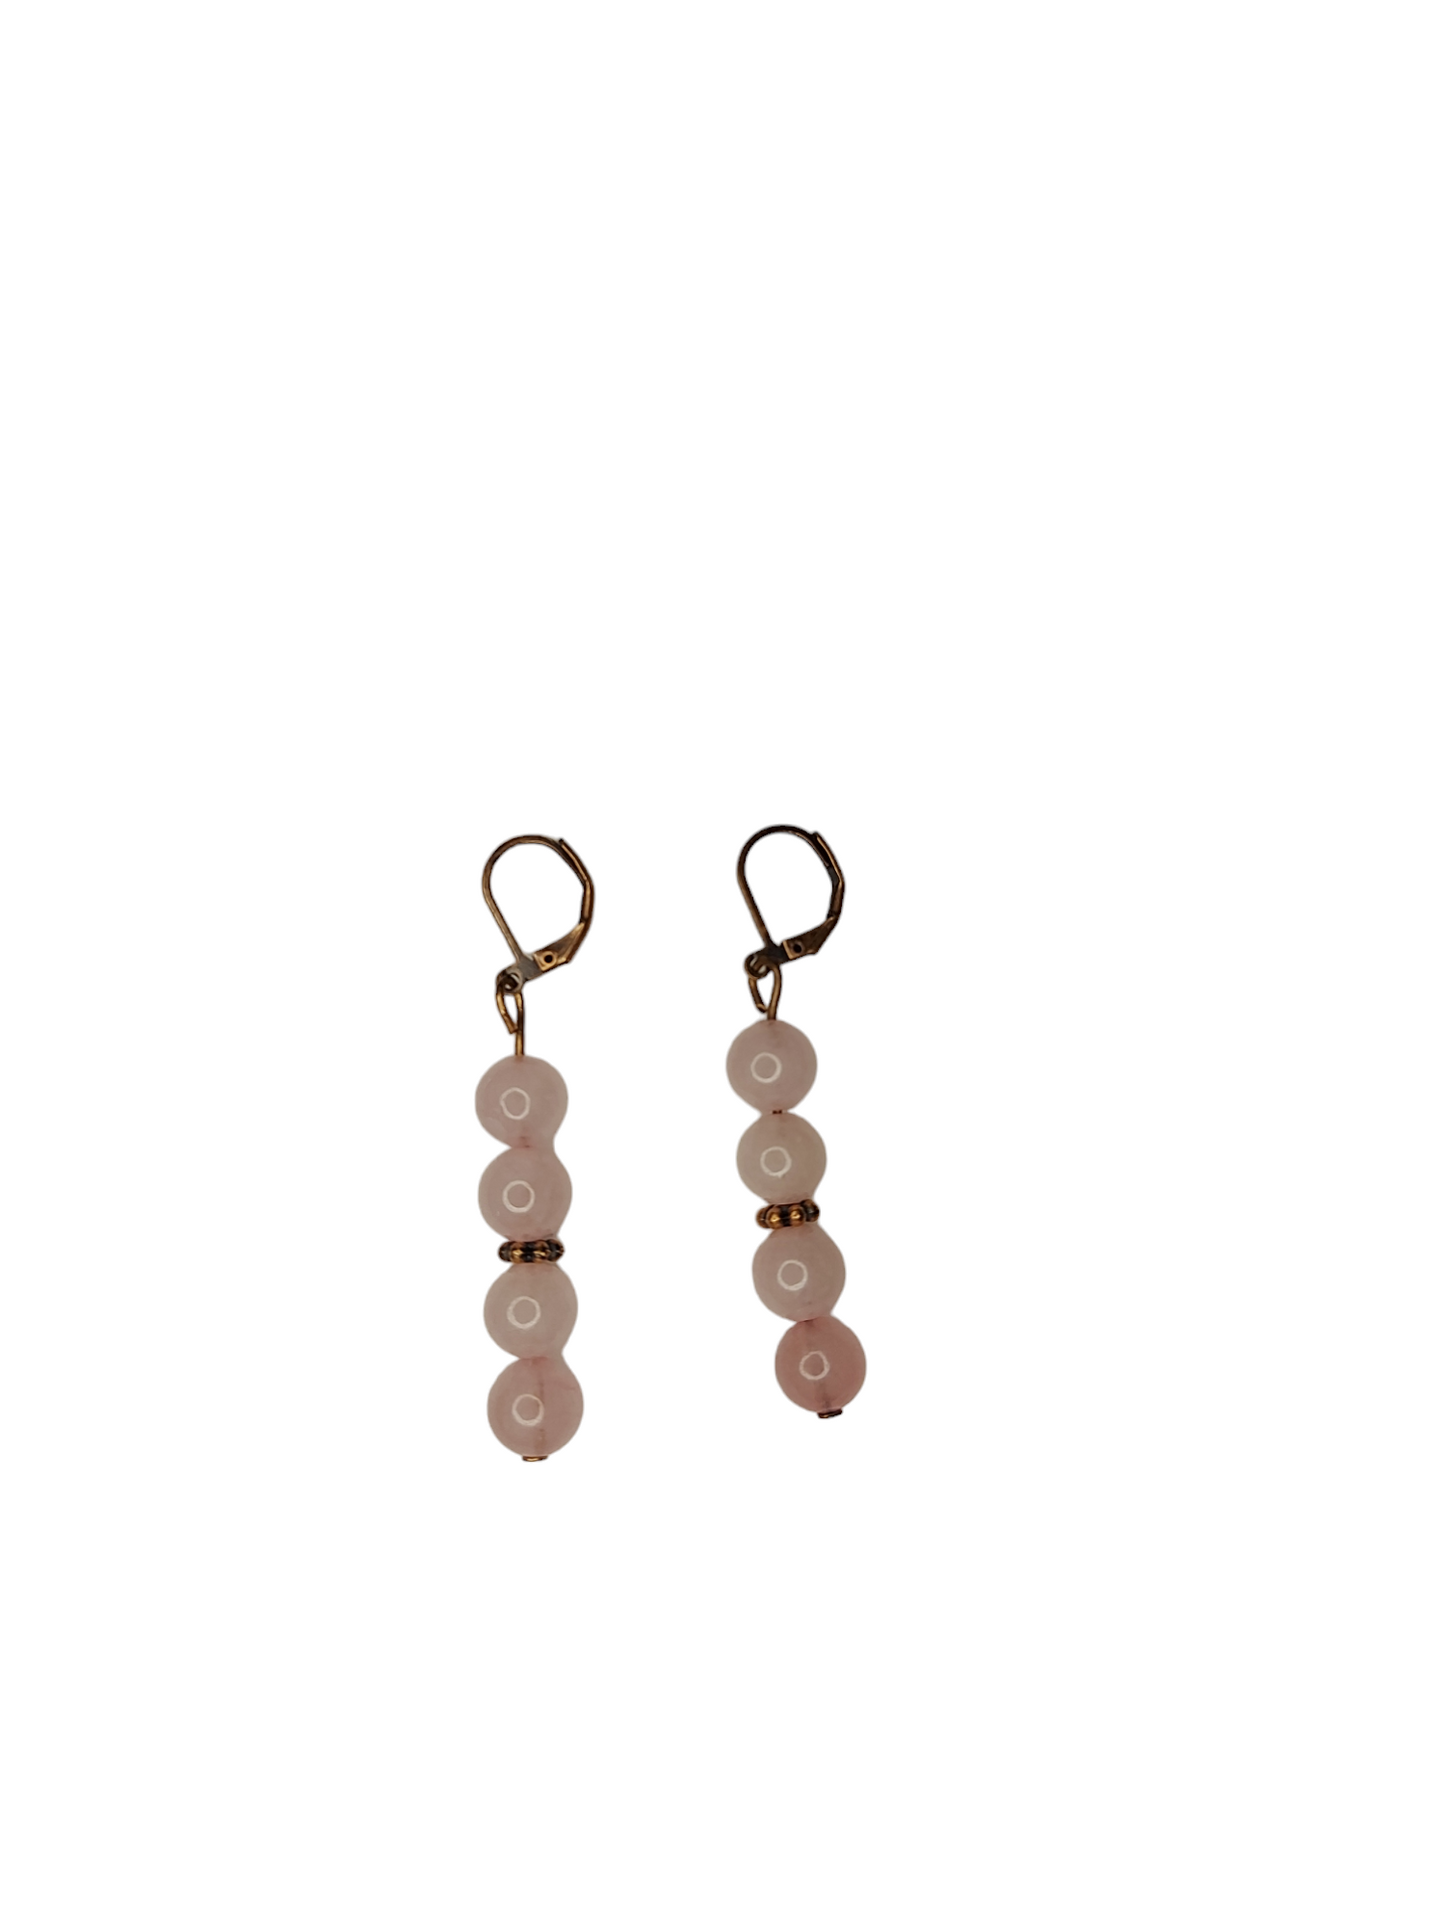 Copper and Semiprecious Gemstone Earrings